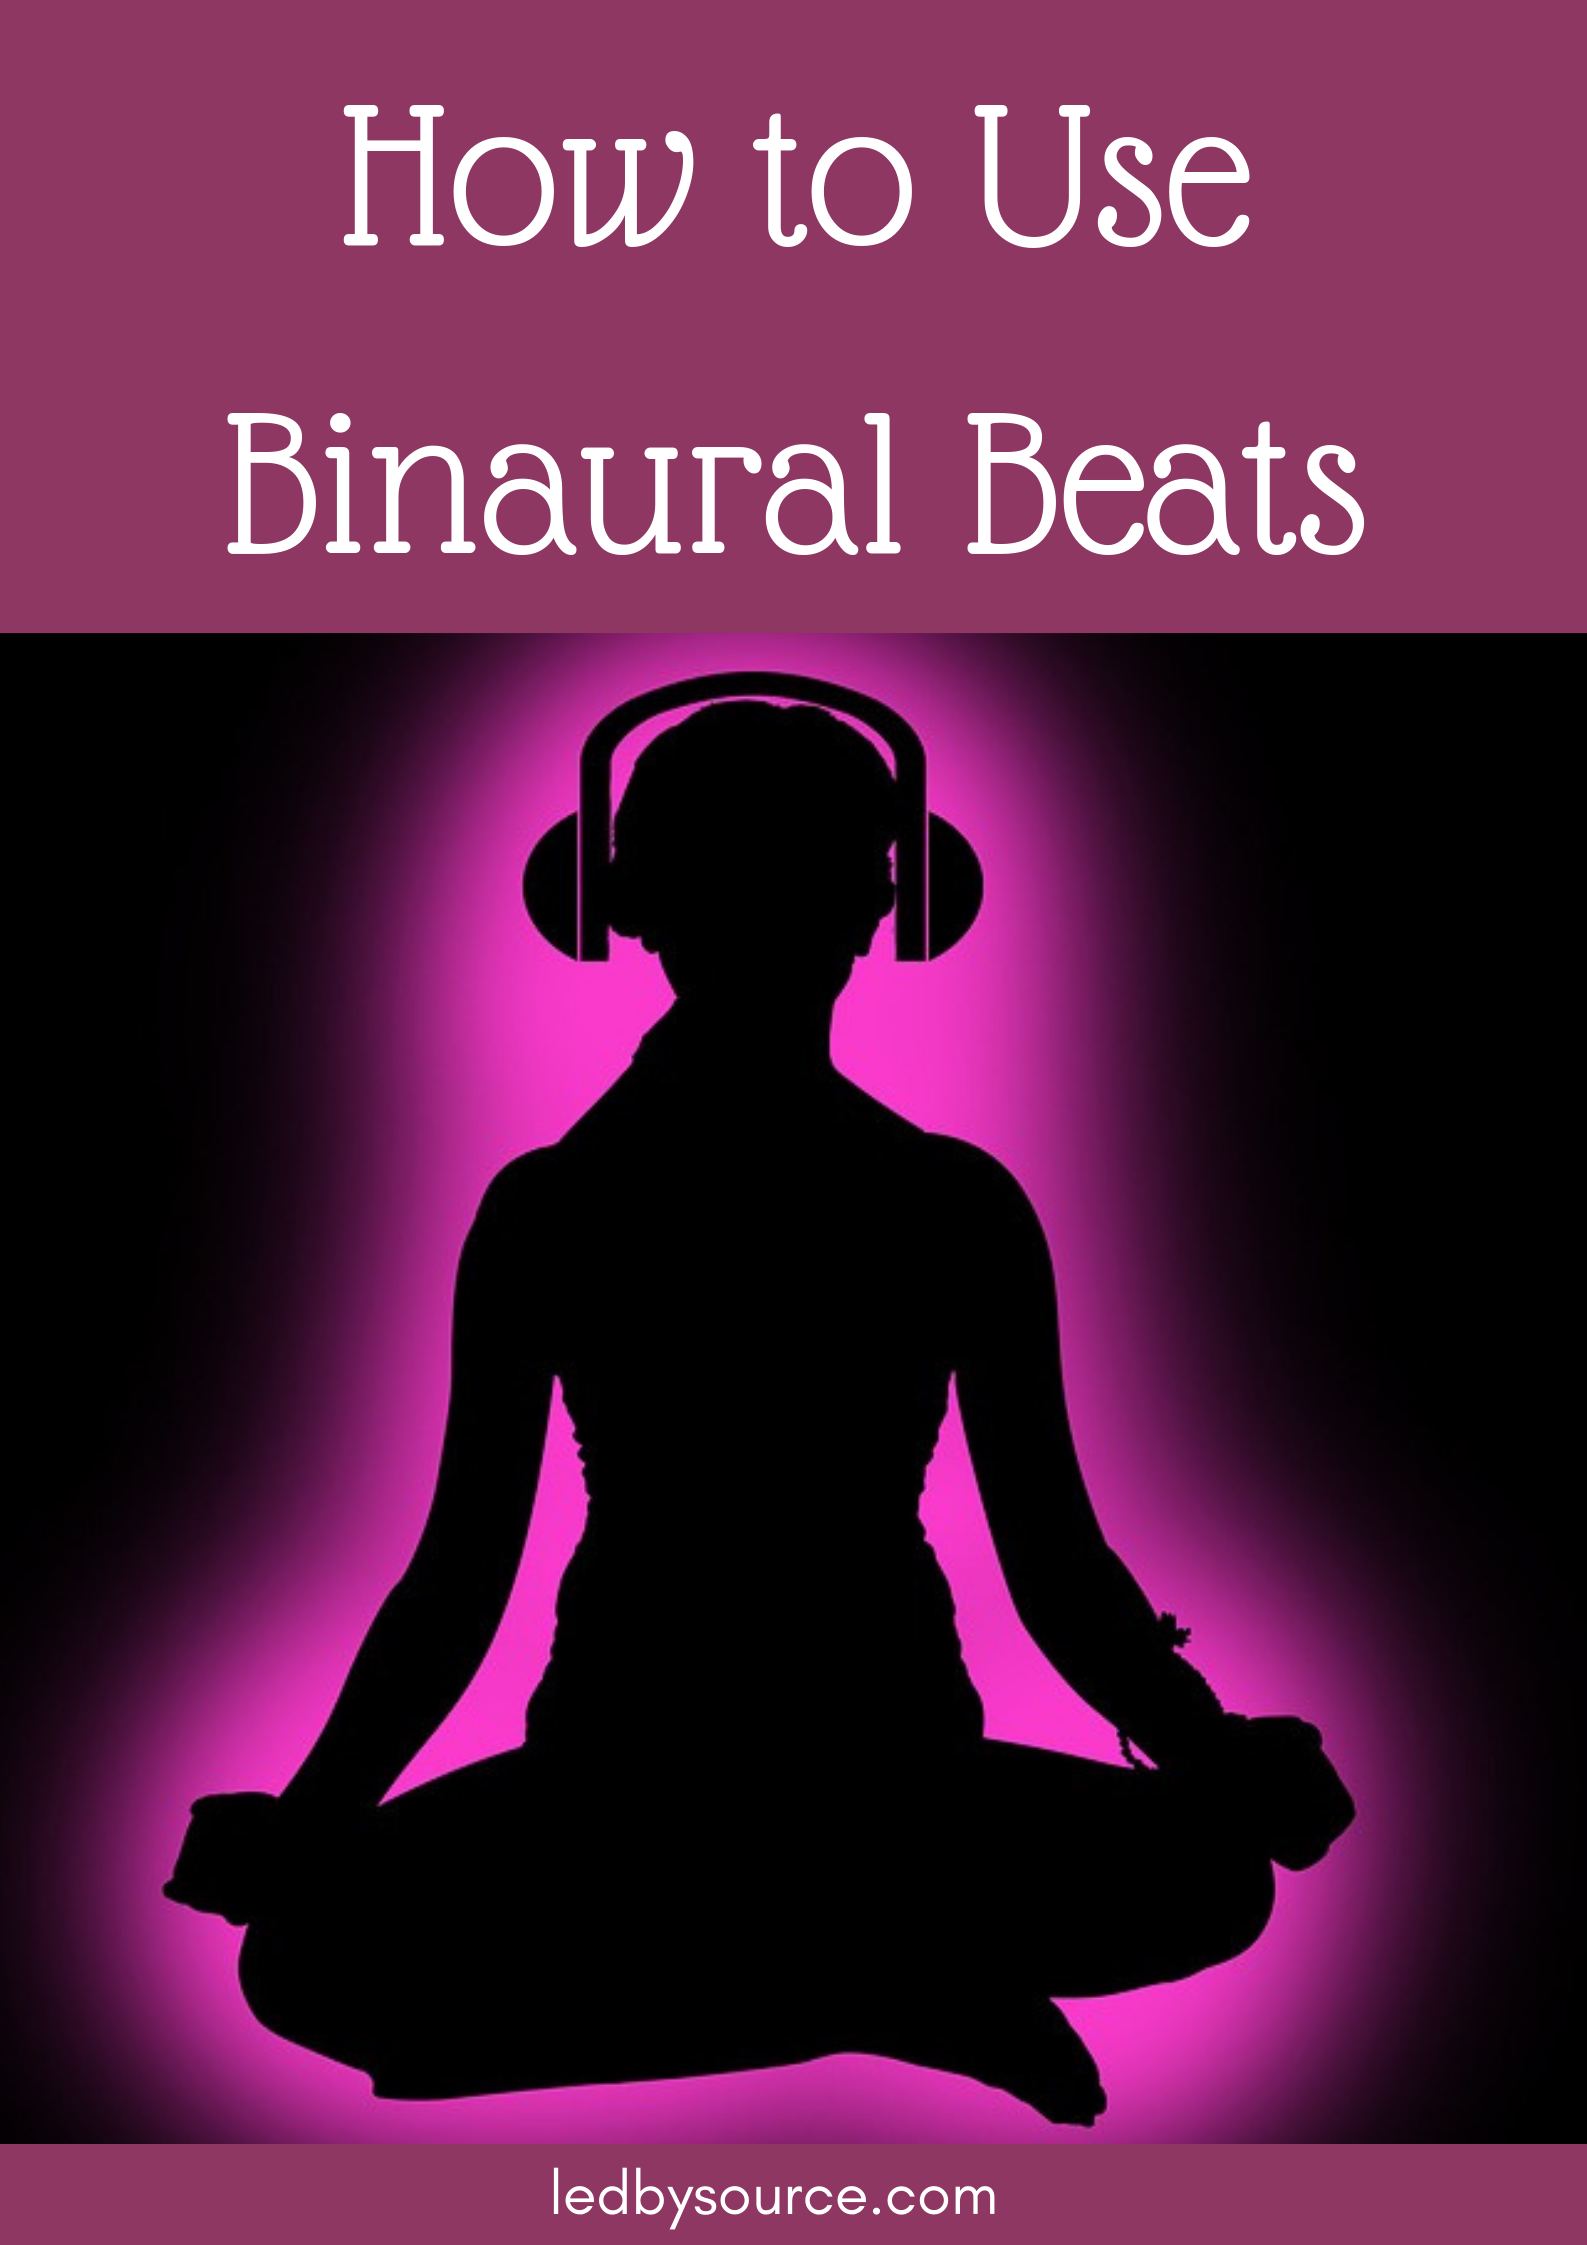 binaural audio meaning